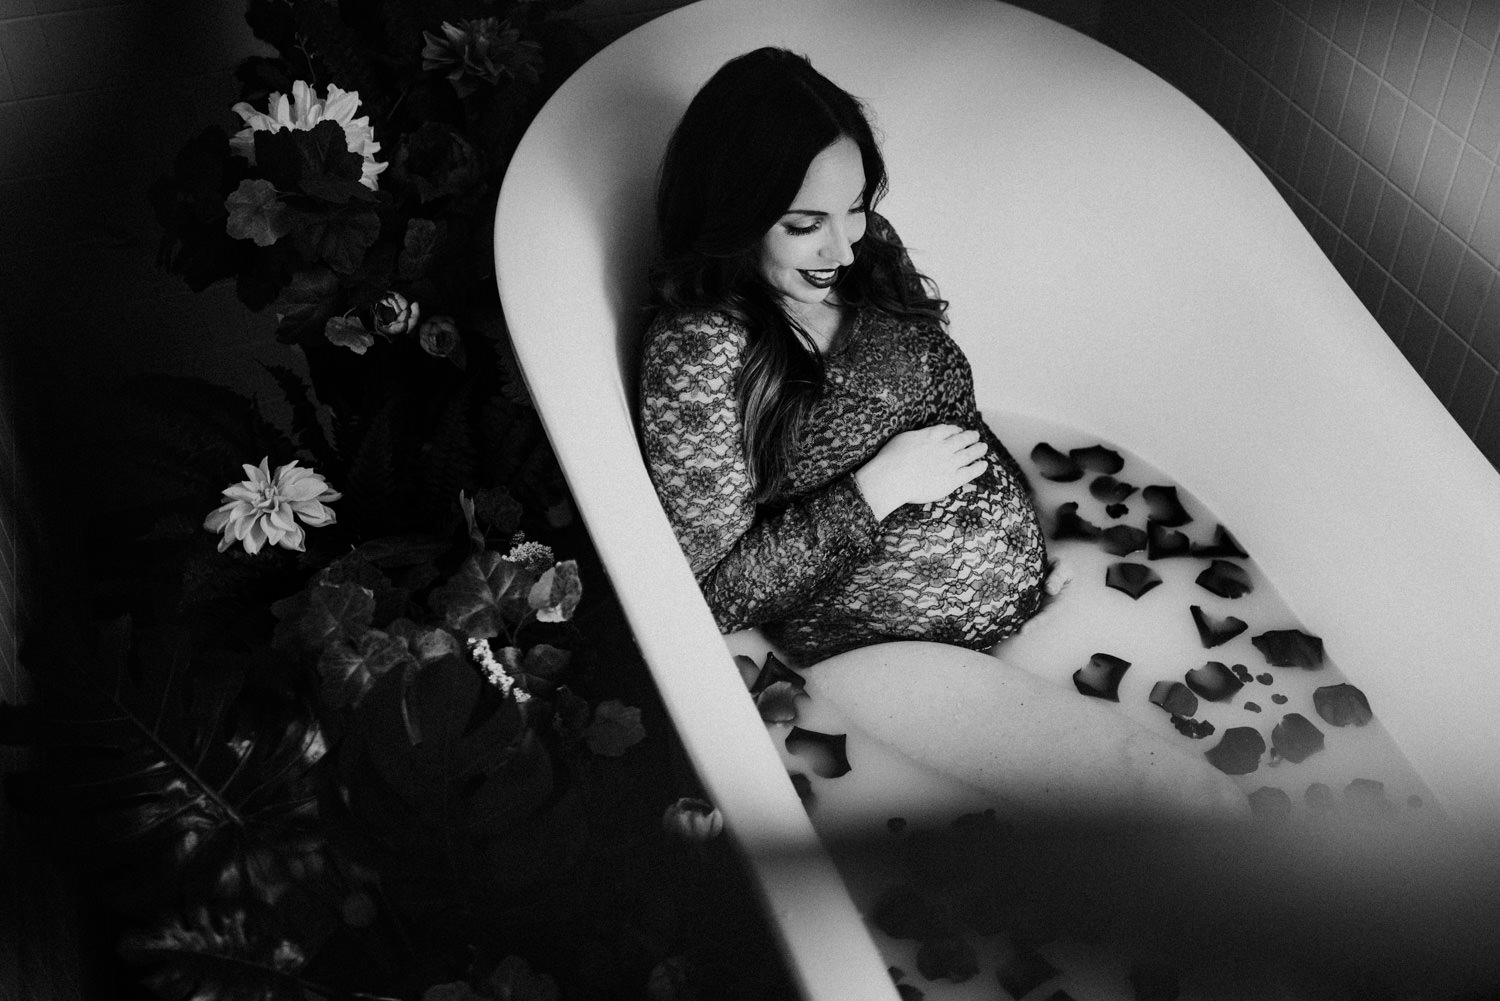 vancouver family photographer, maternity photography, milk bath maternity photos